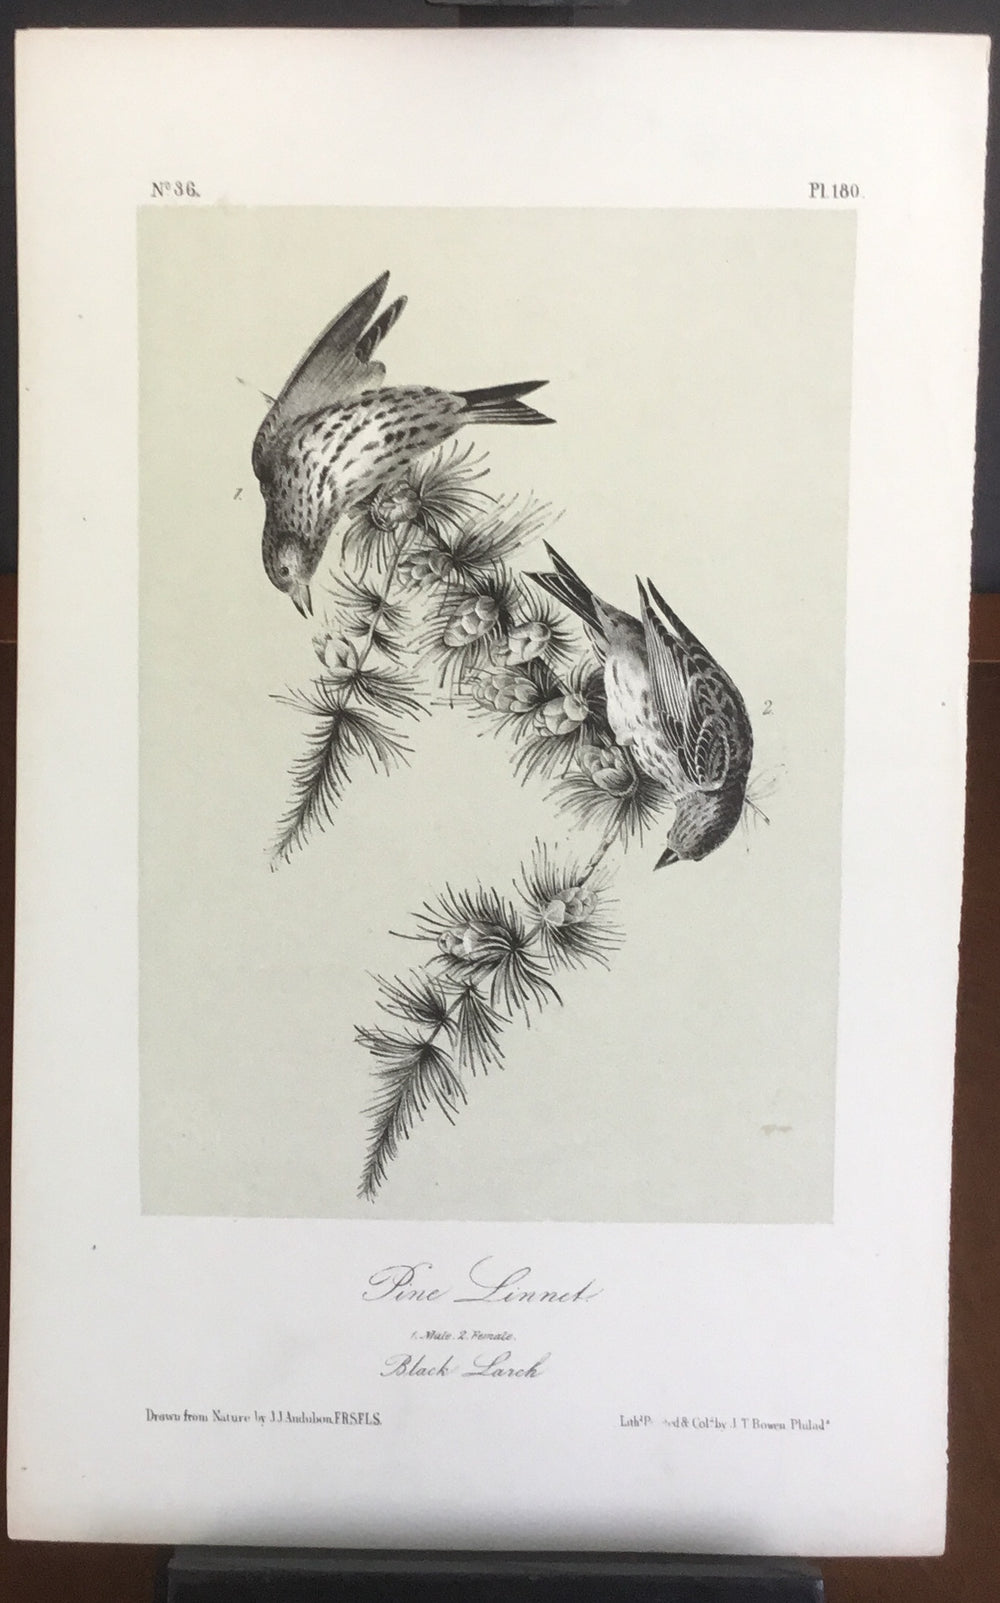 Audubon Octavo Pine Linnet, plate 180, uncolored test sheet, 7 x 11